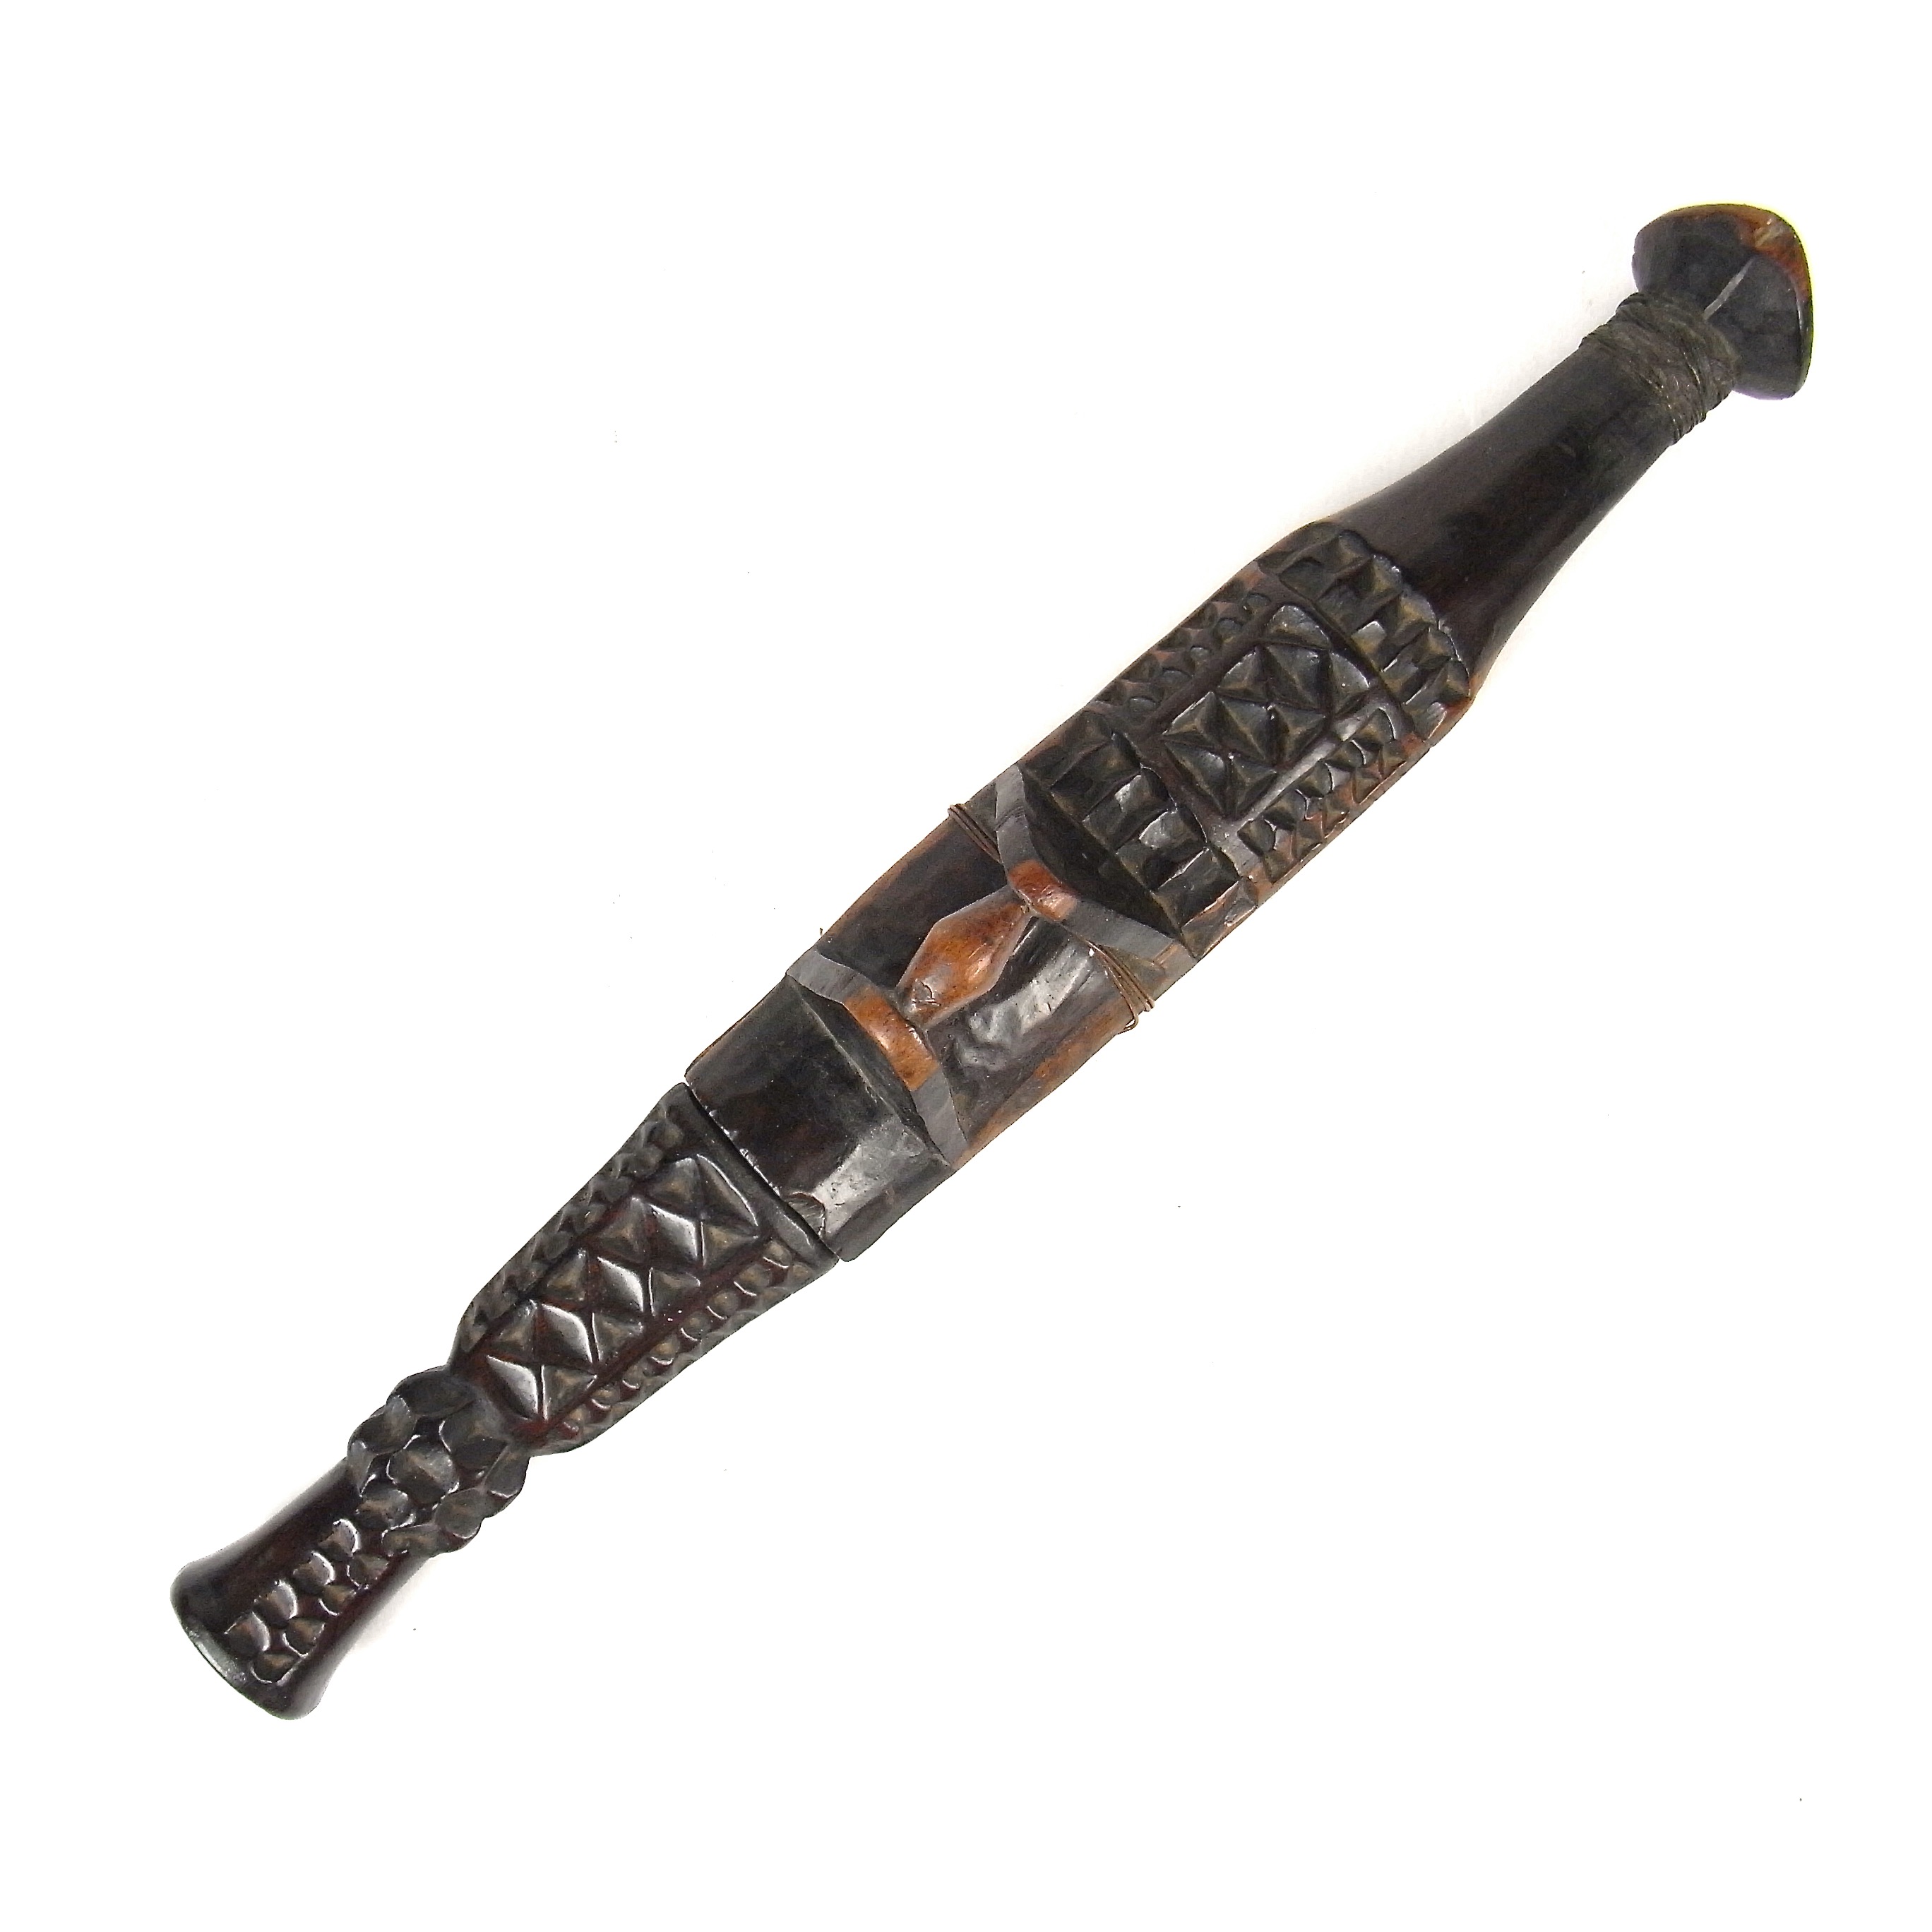 Tribal Art: An African Shona tribe dagger with sheath, Zimbabwe, 19th century